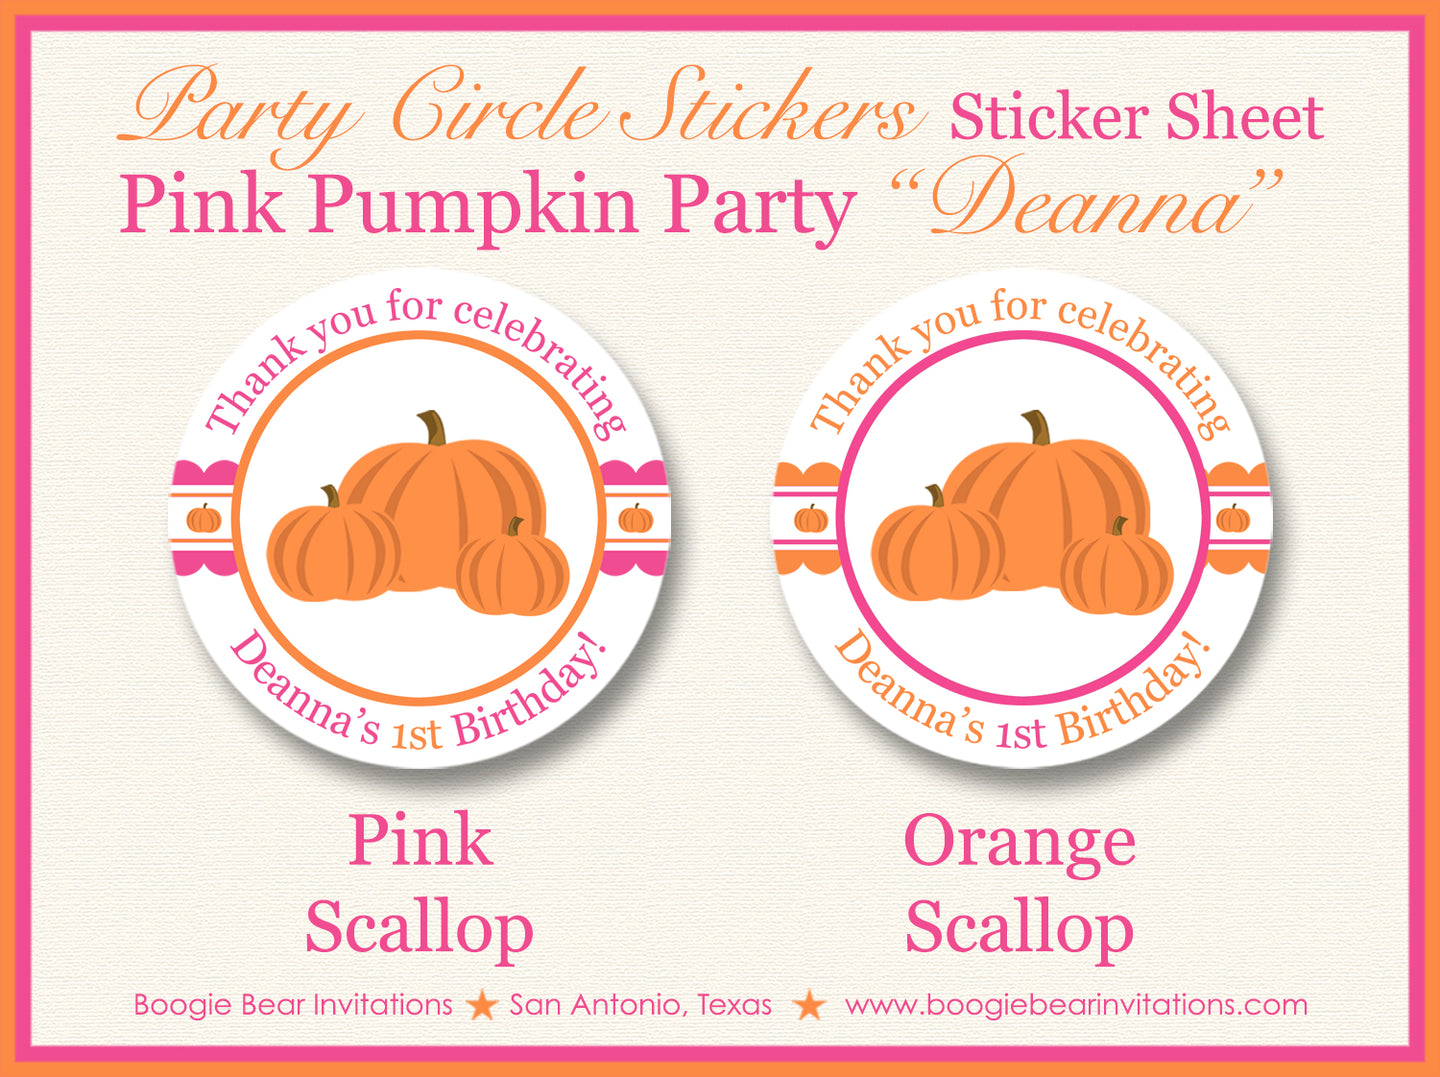 Pink Pumpkin Birthday Party Stickers Circle Sheet Round Circle Tag Girl Little Autumn Fall Country Farm Boogie Bear Invitations Deanna Theme